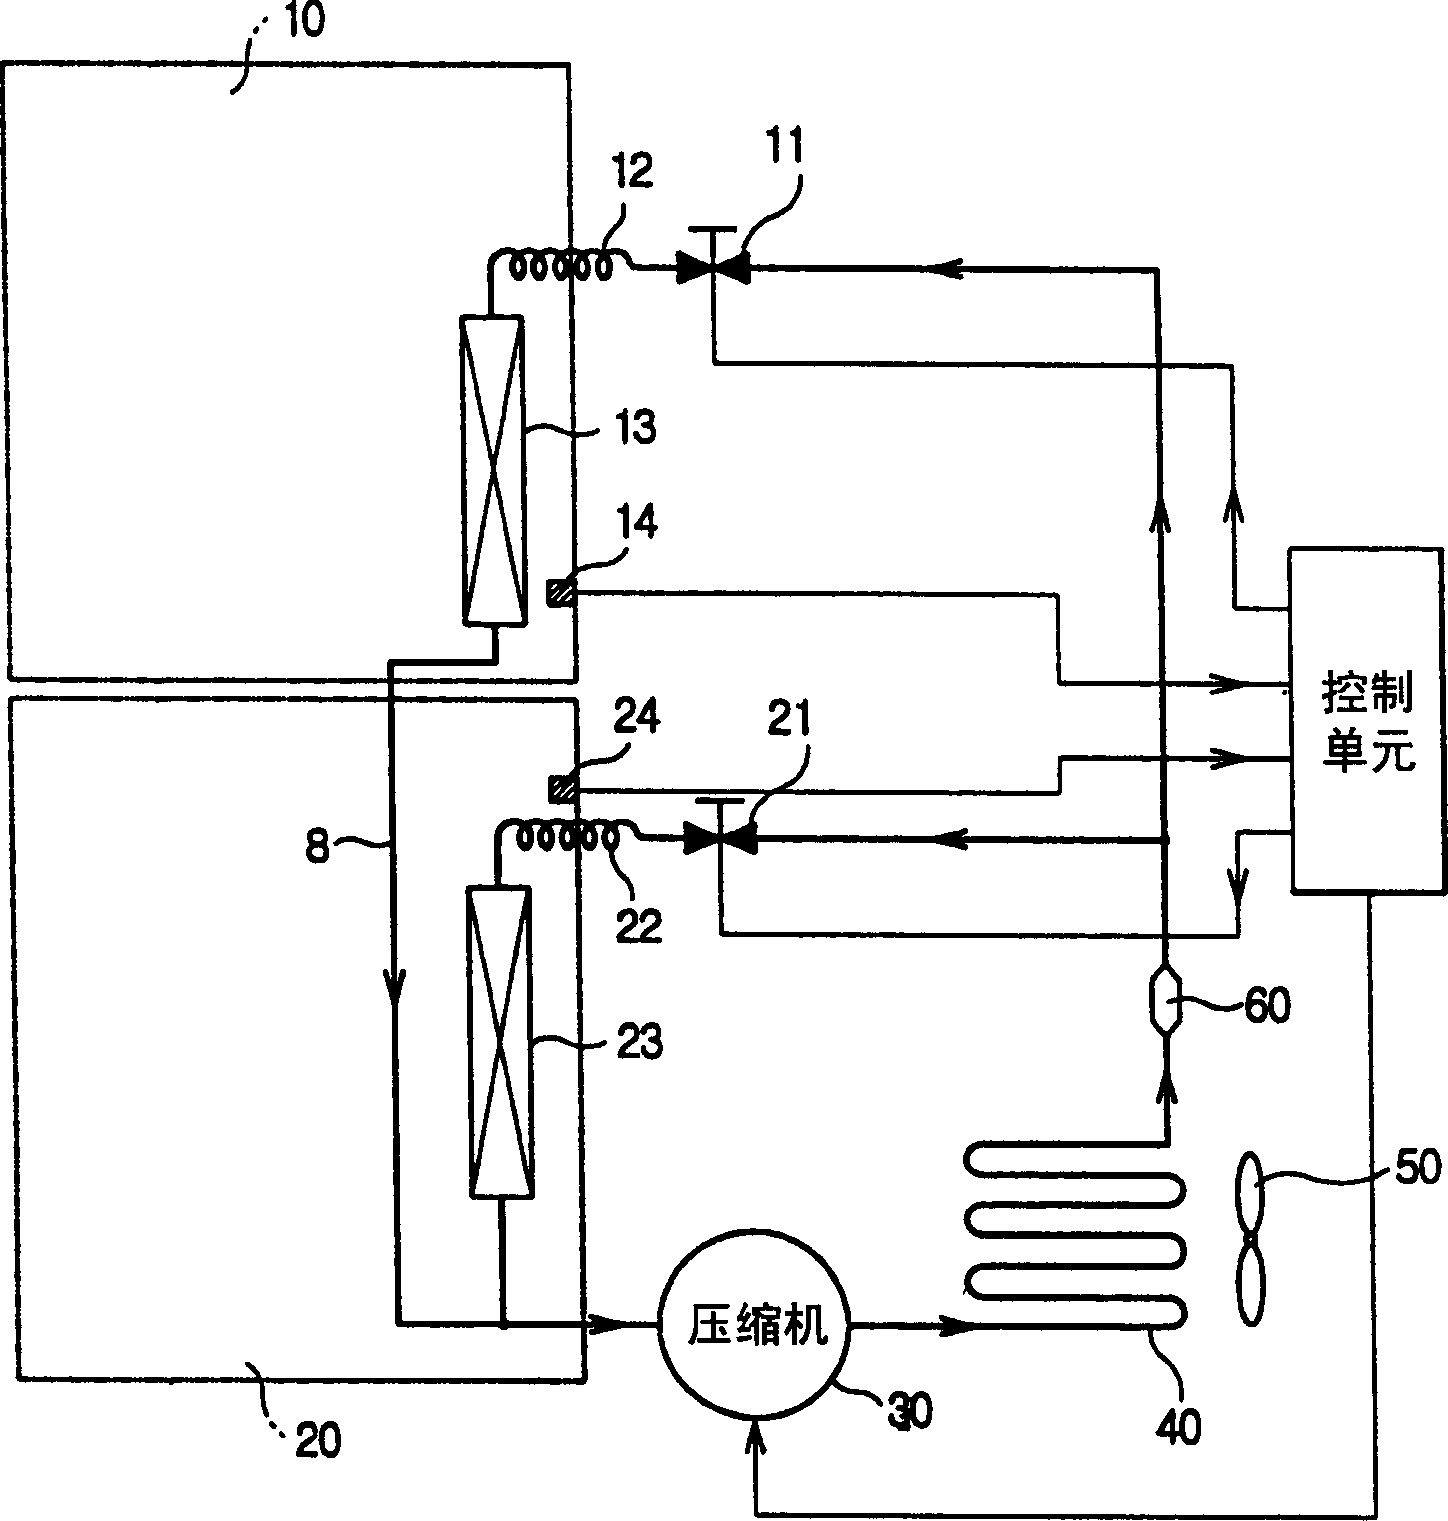 Control method for multi-chamber type kimchi refrigerator